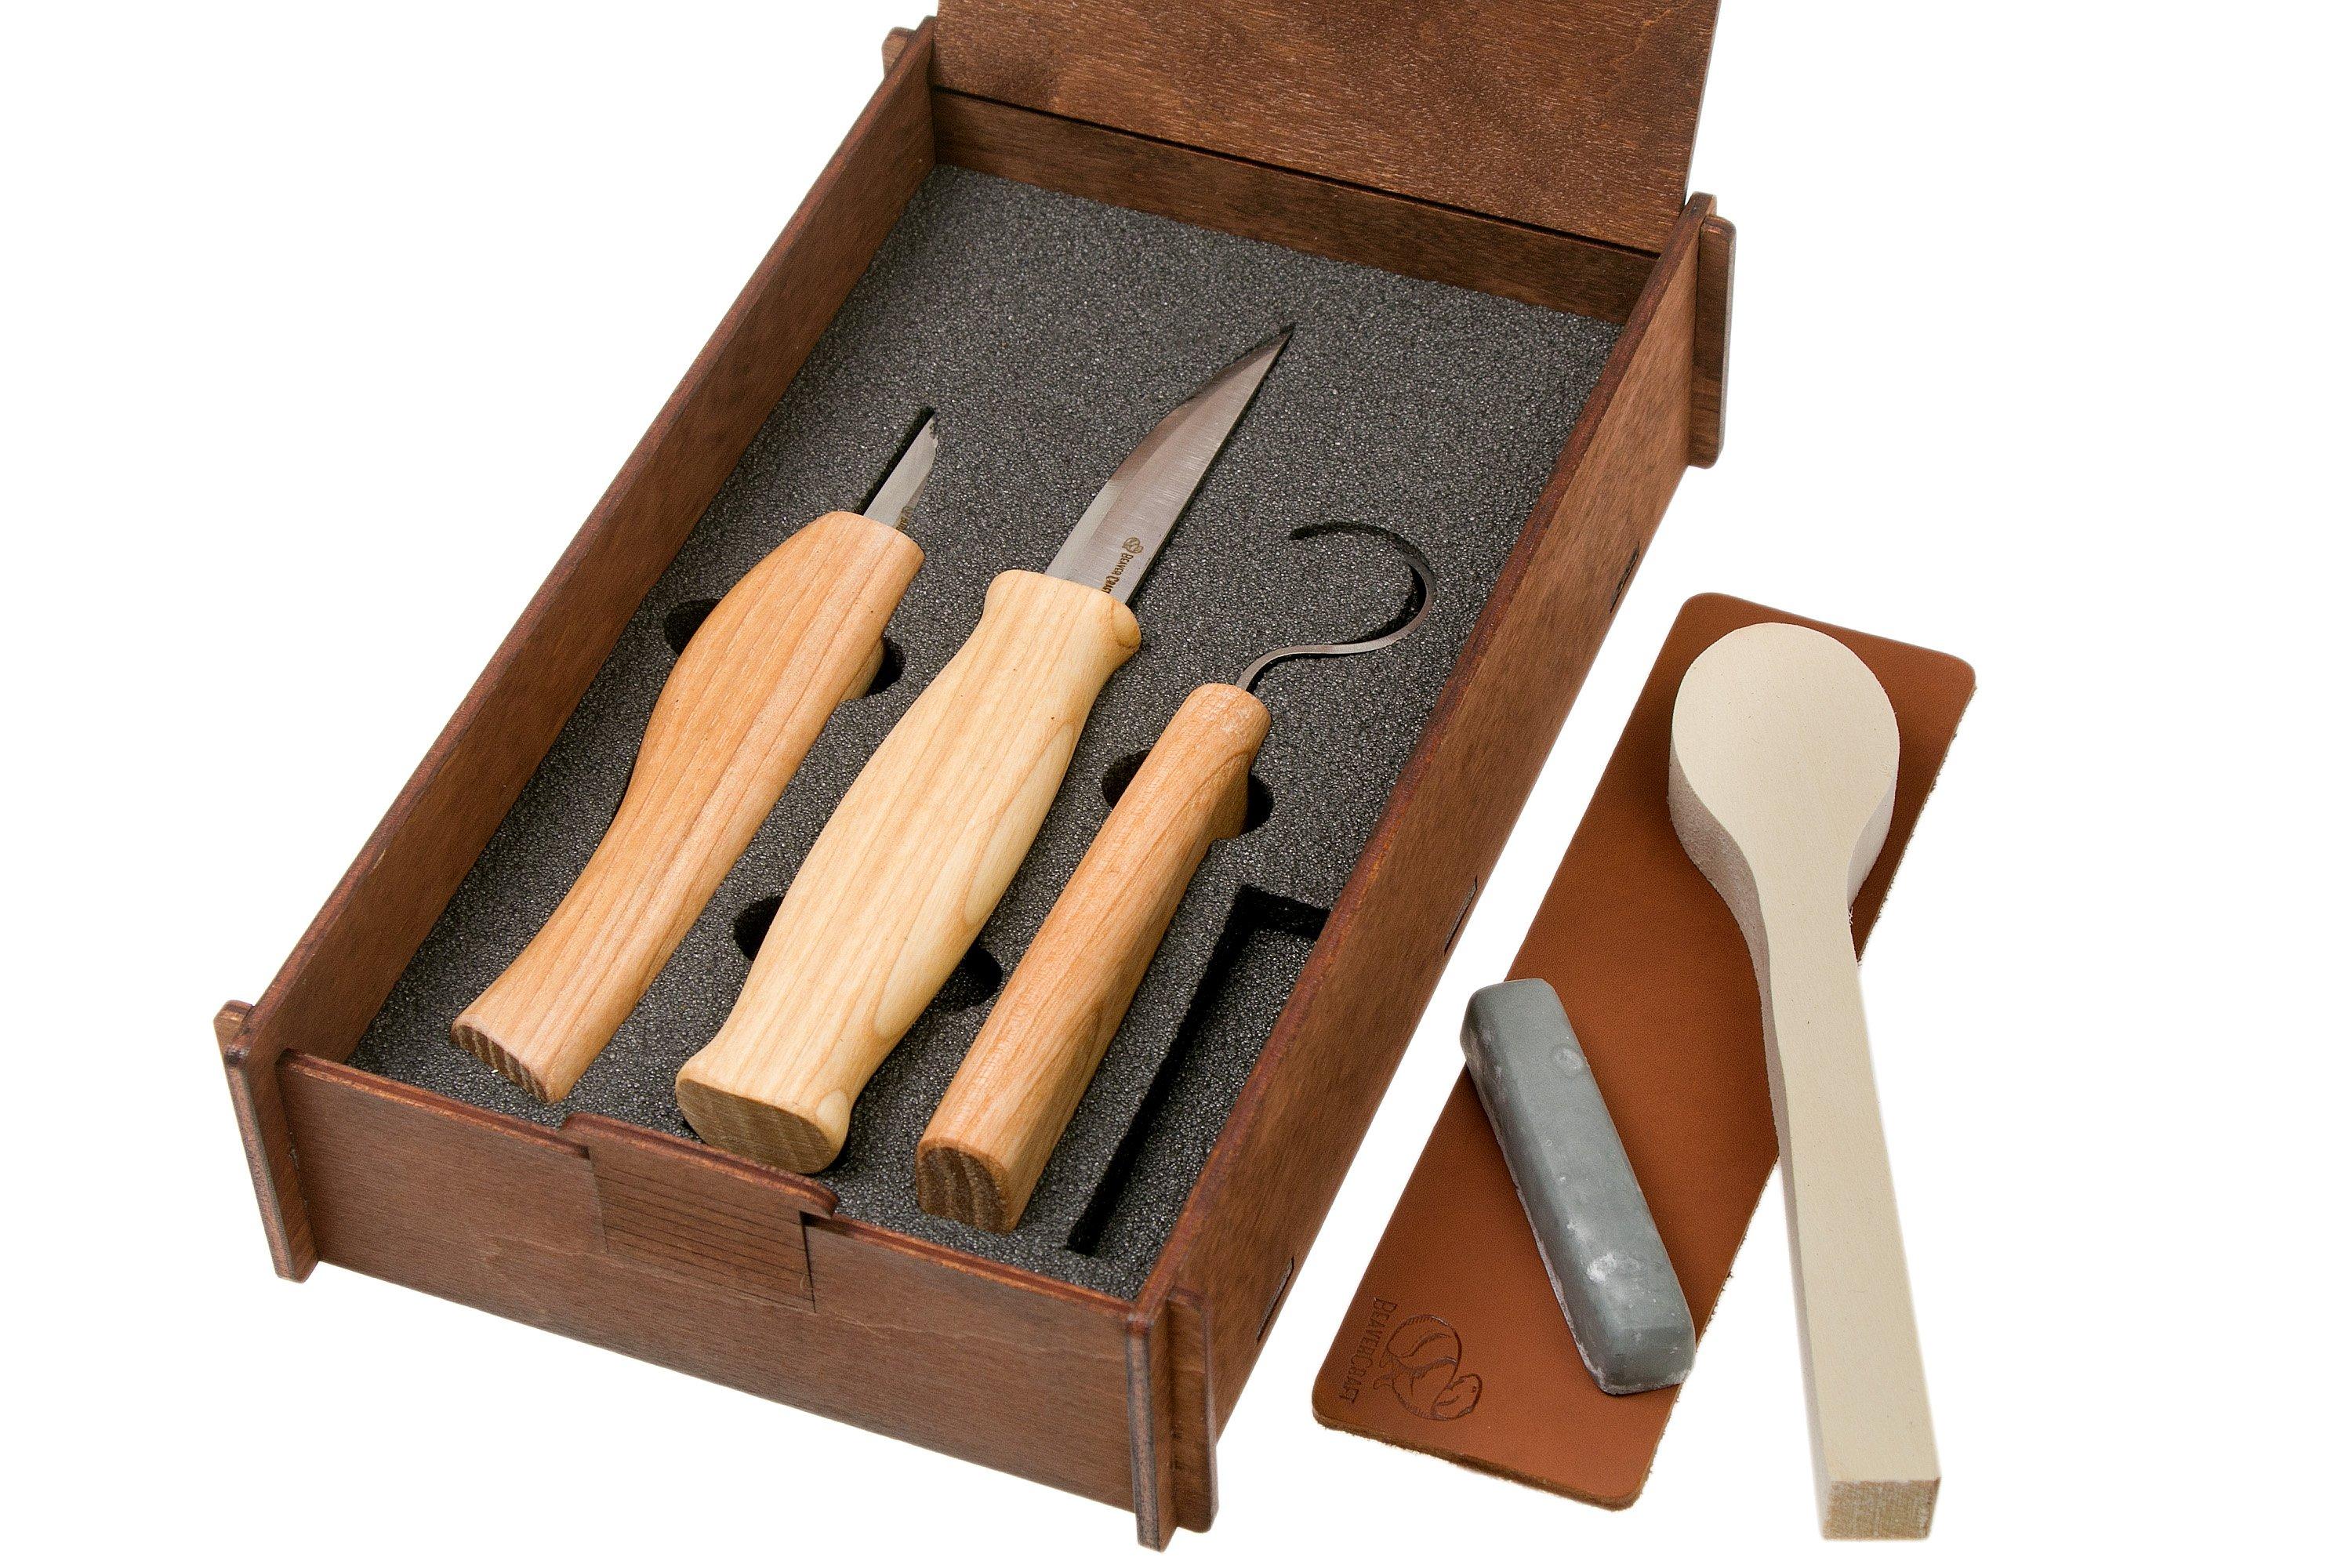 BeaverCraft Spoon and Kuksa Carving Professional Set